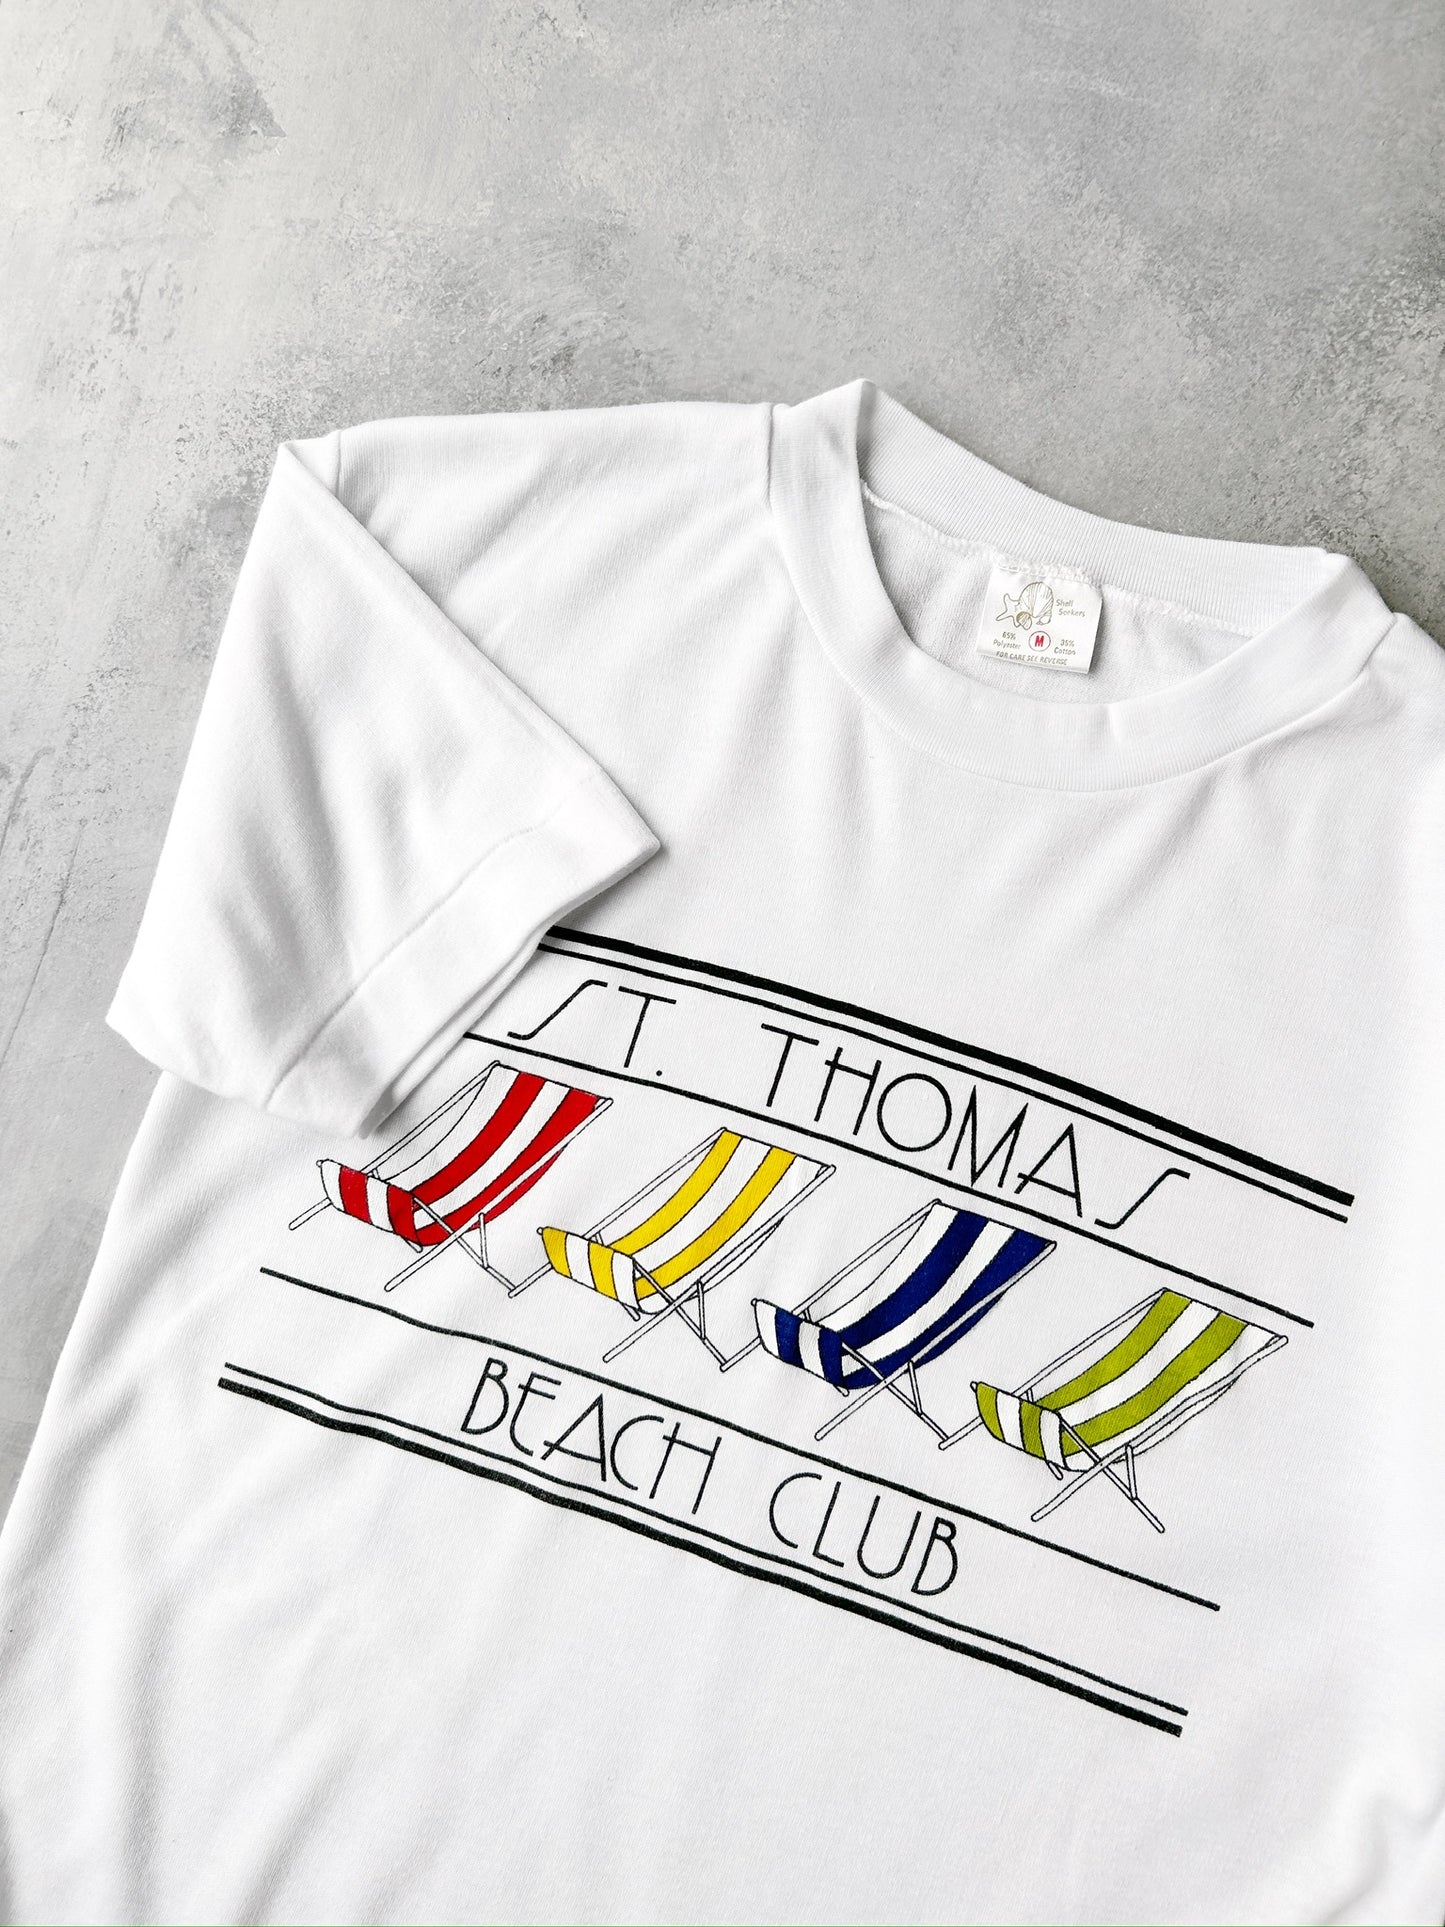 St. Thomas Beach Club T-Shirt 80's - Small